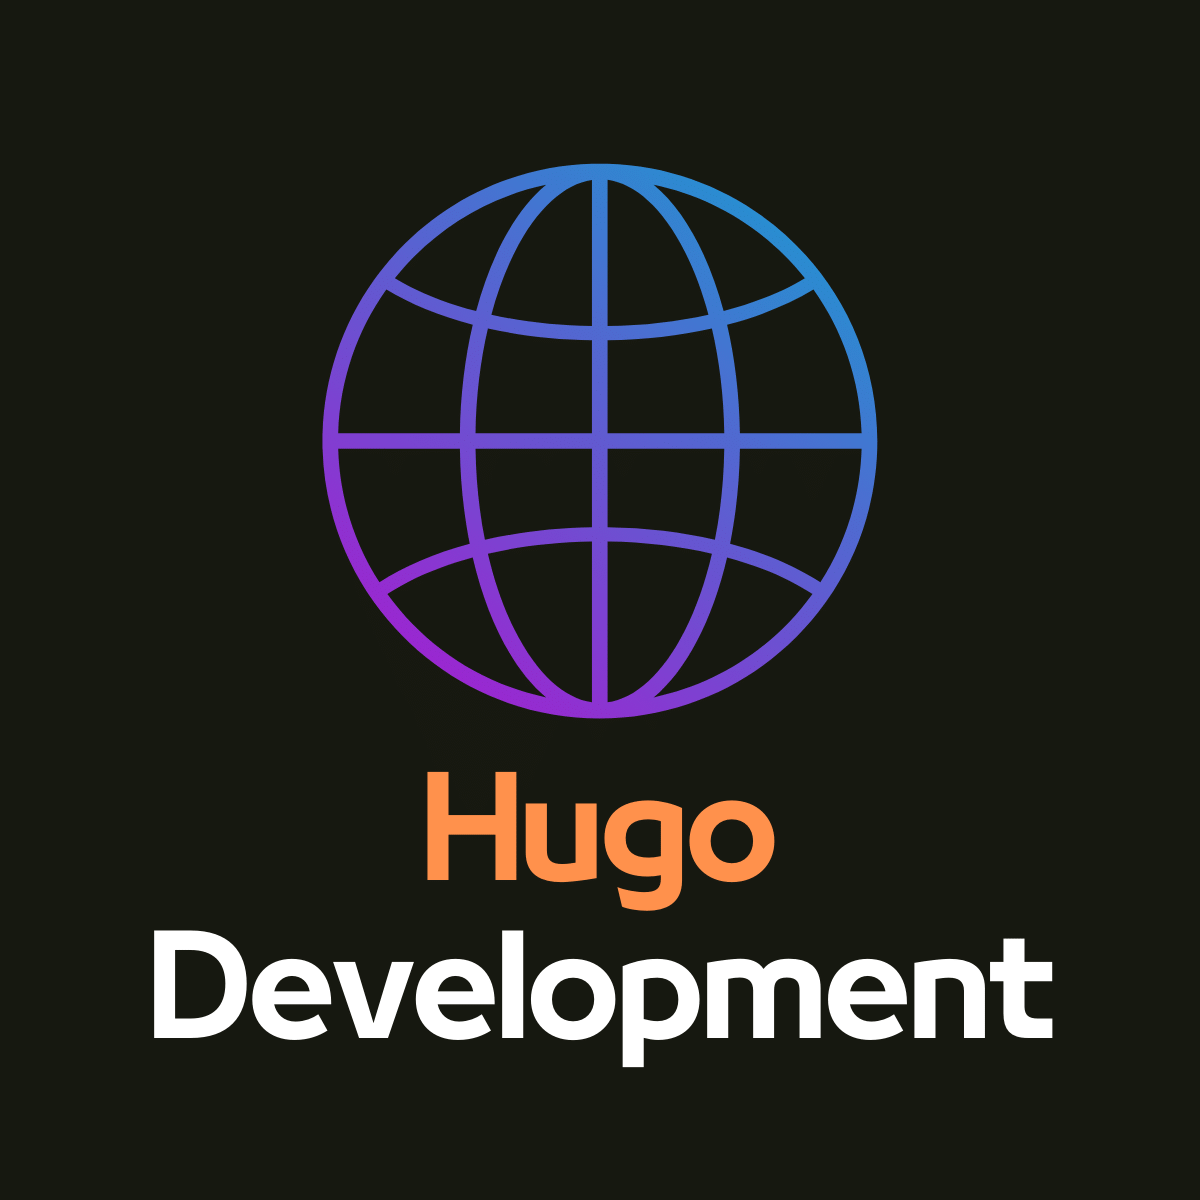 Hugo Development Company in India